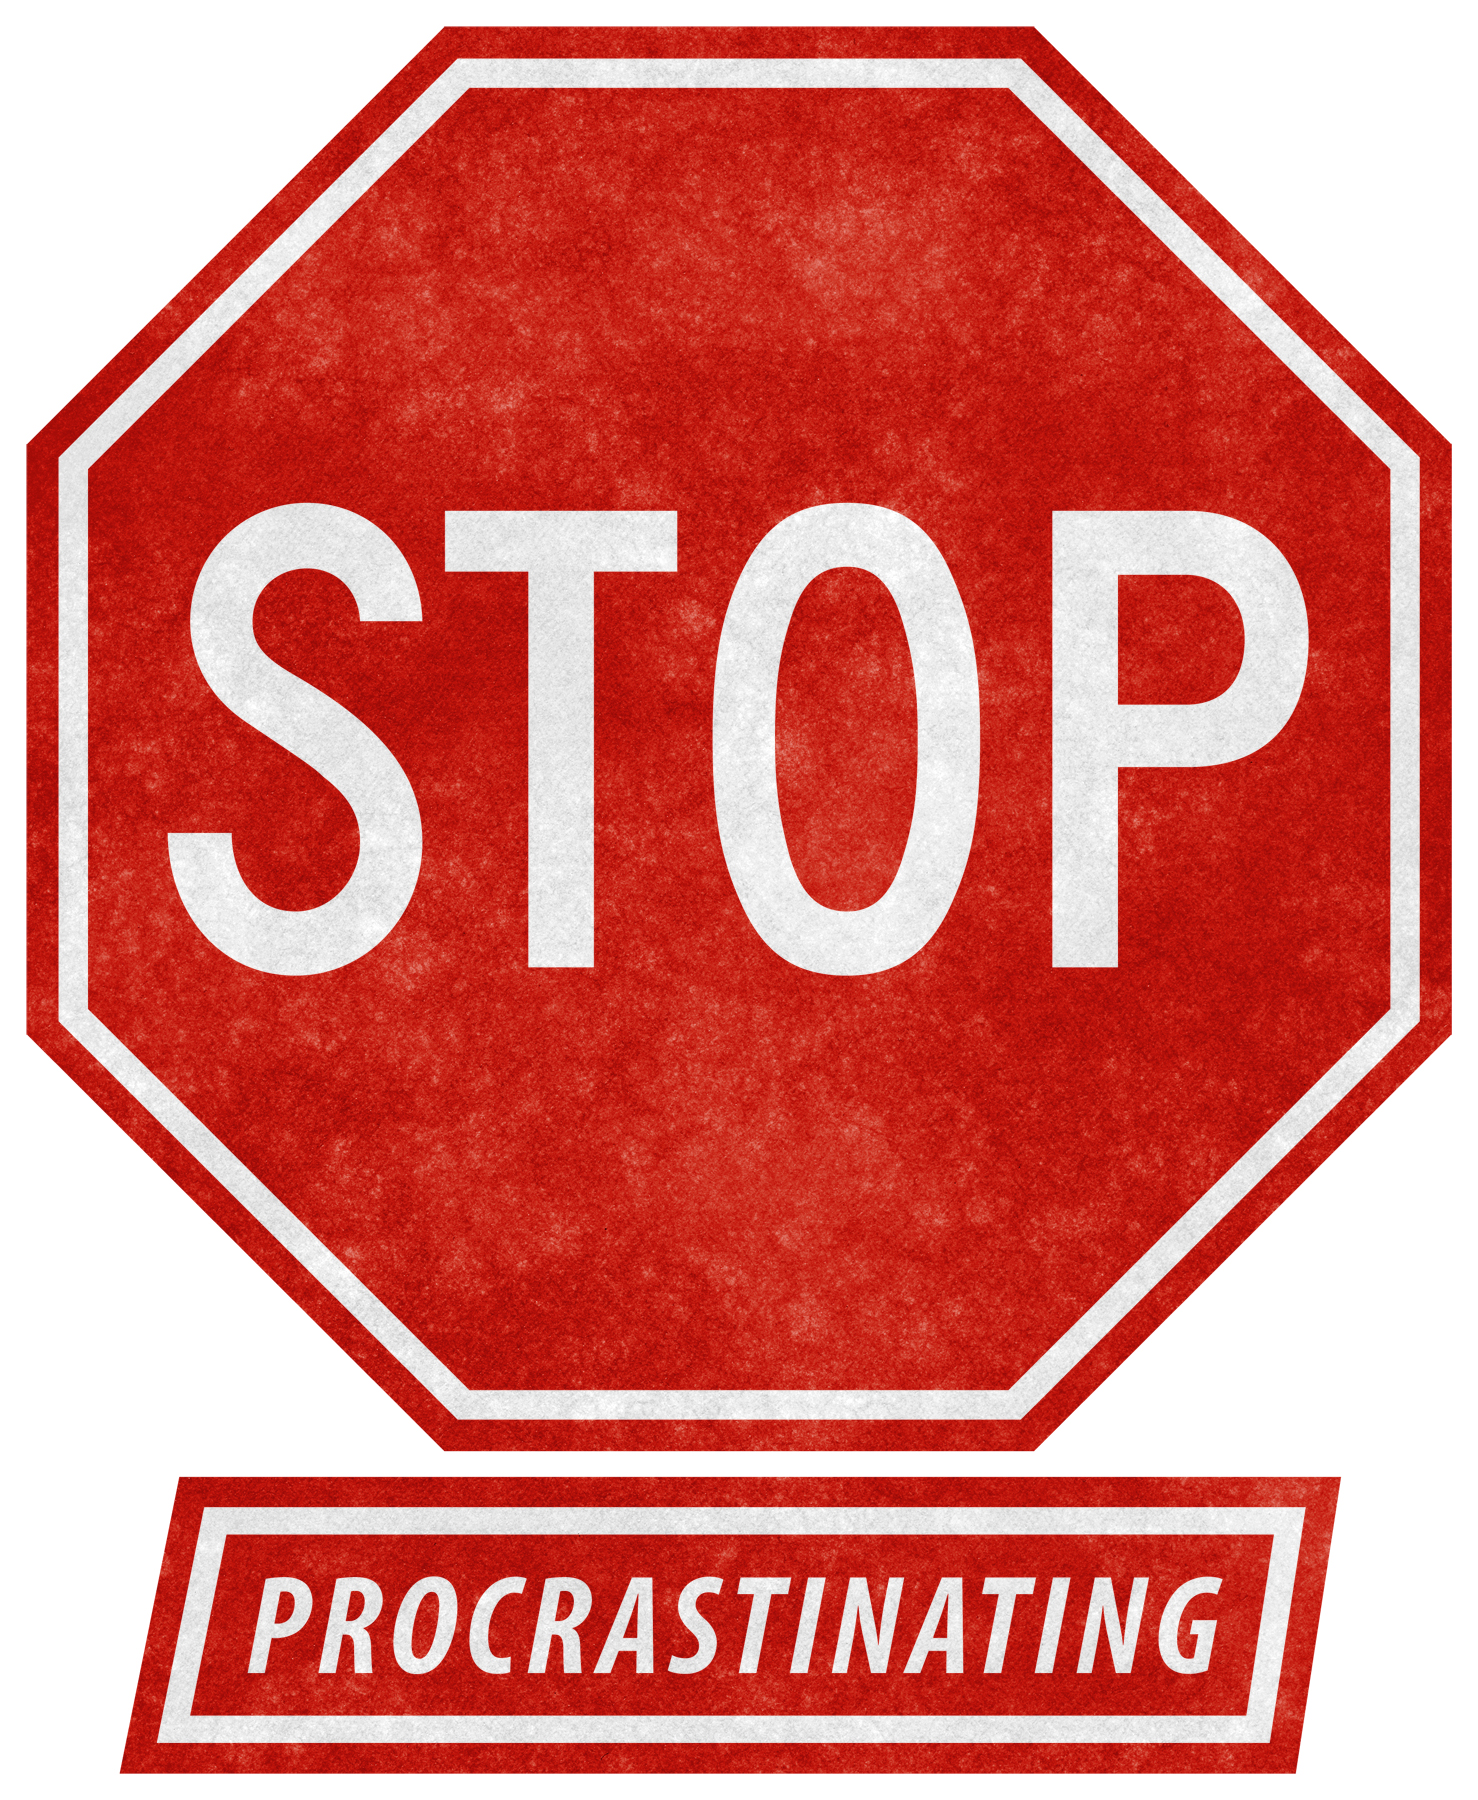 Grunge road sign - stop procrastinating photo